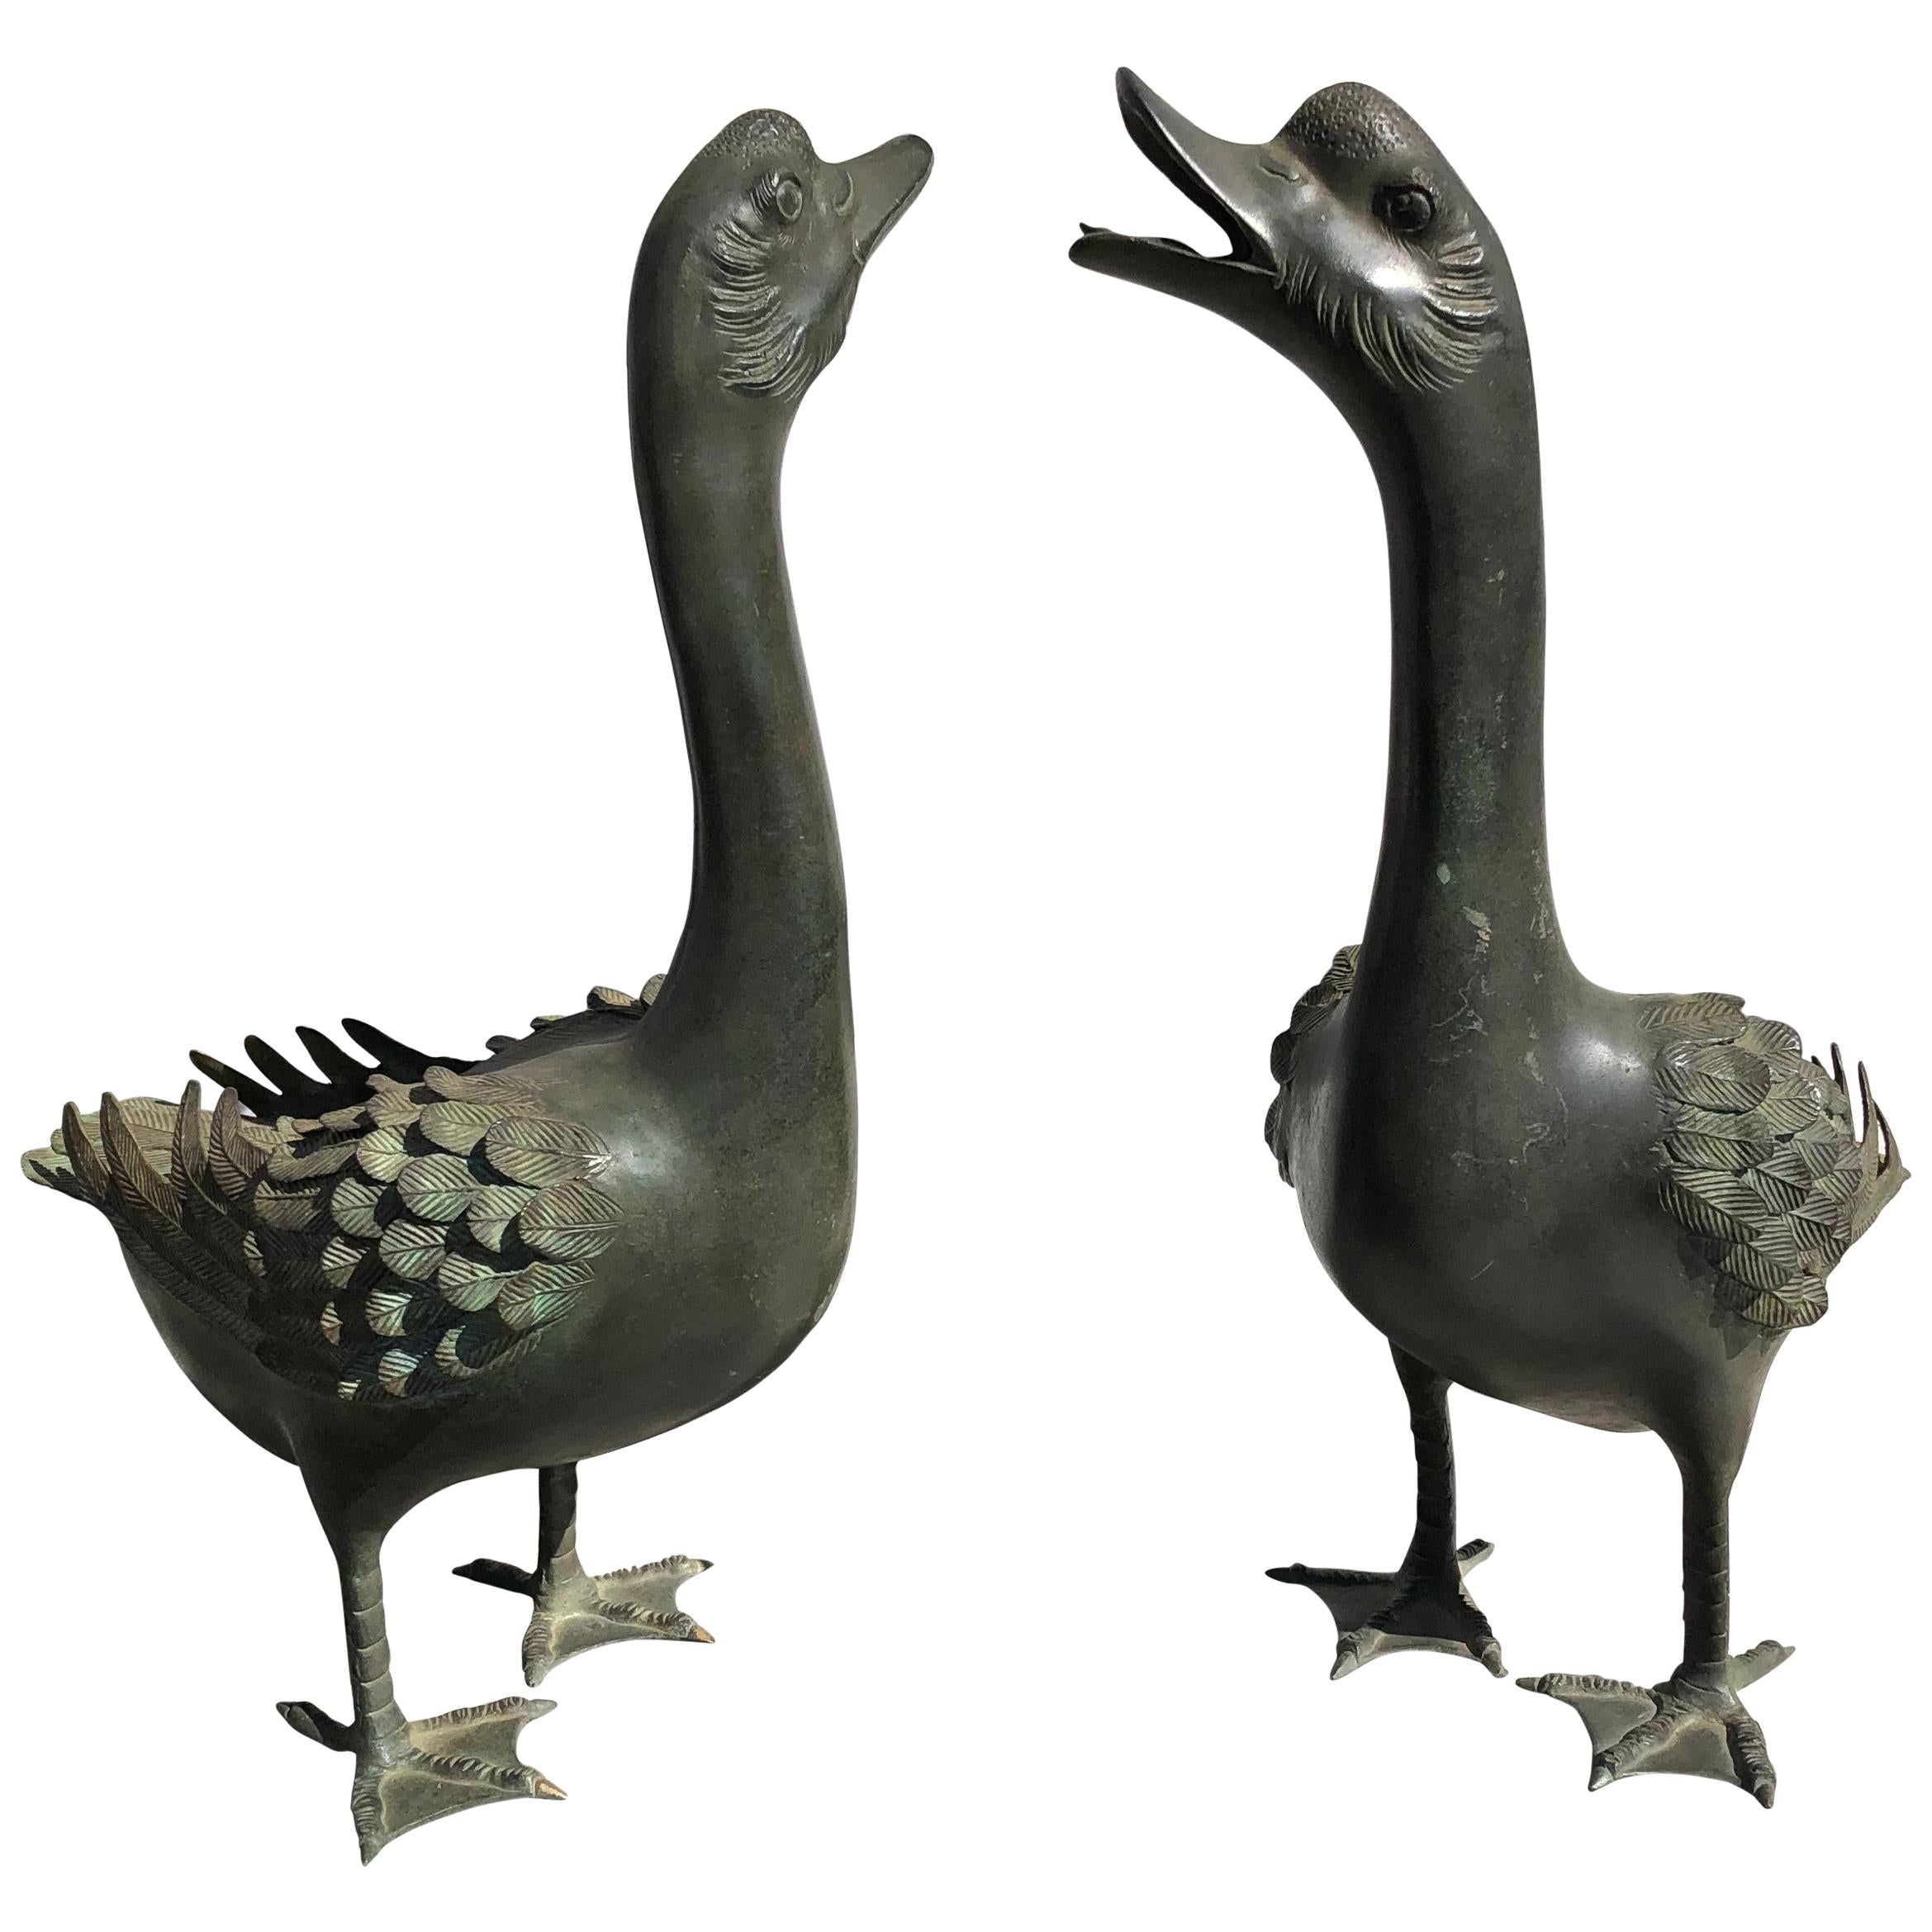 Japan Antique Large Hand Cast Pair Bronze Garden Ducks, Beautiful Details